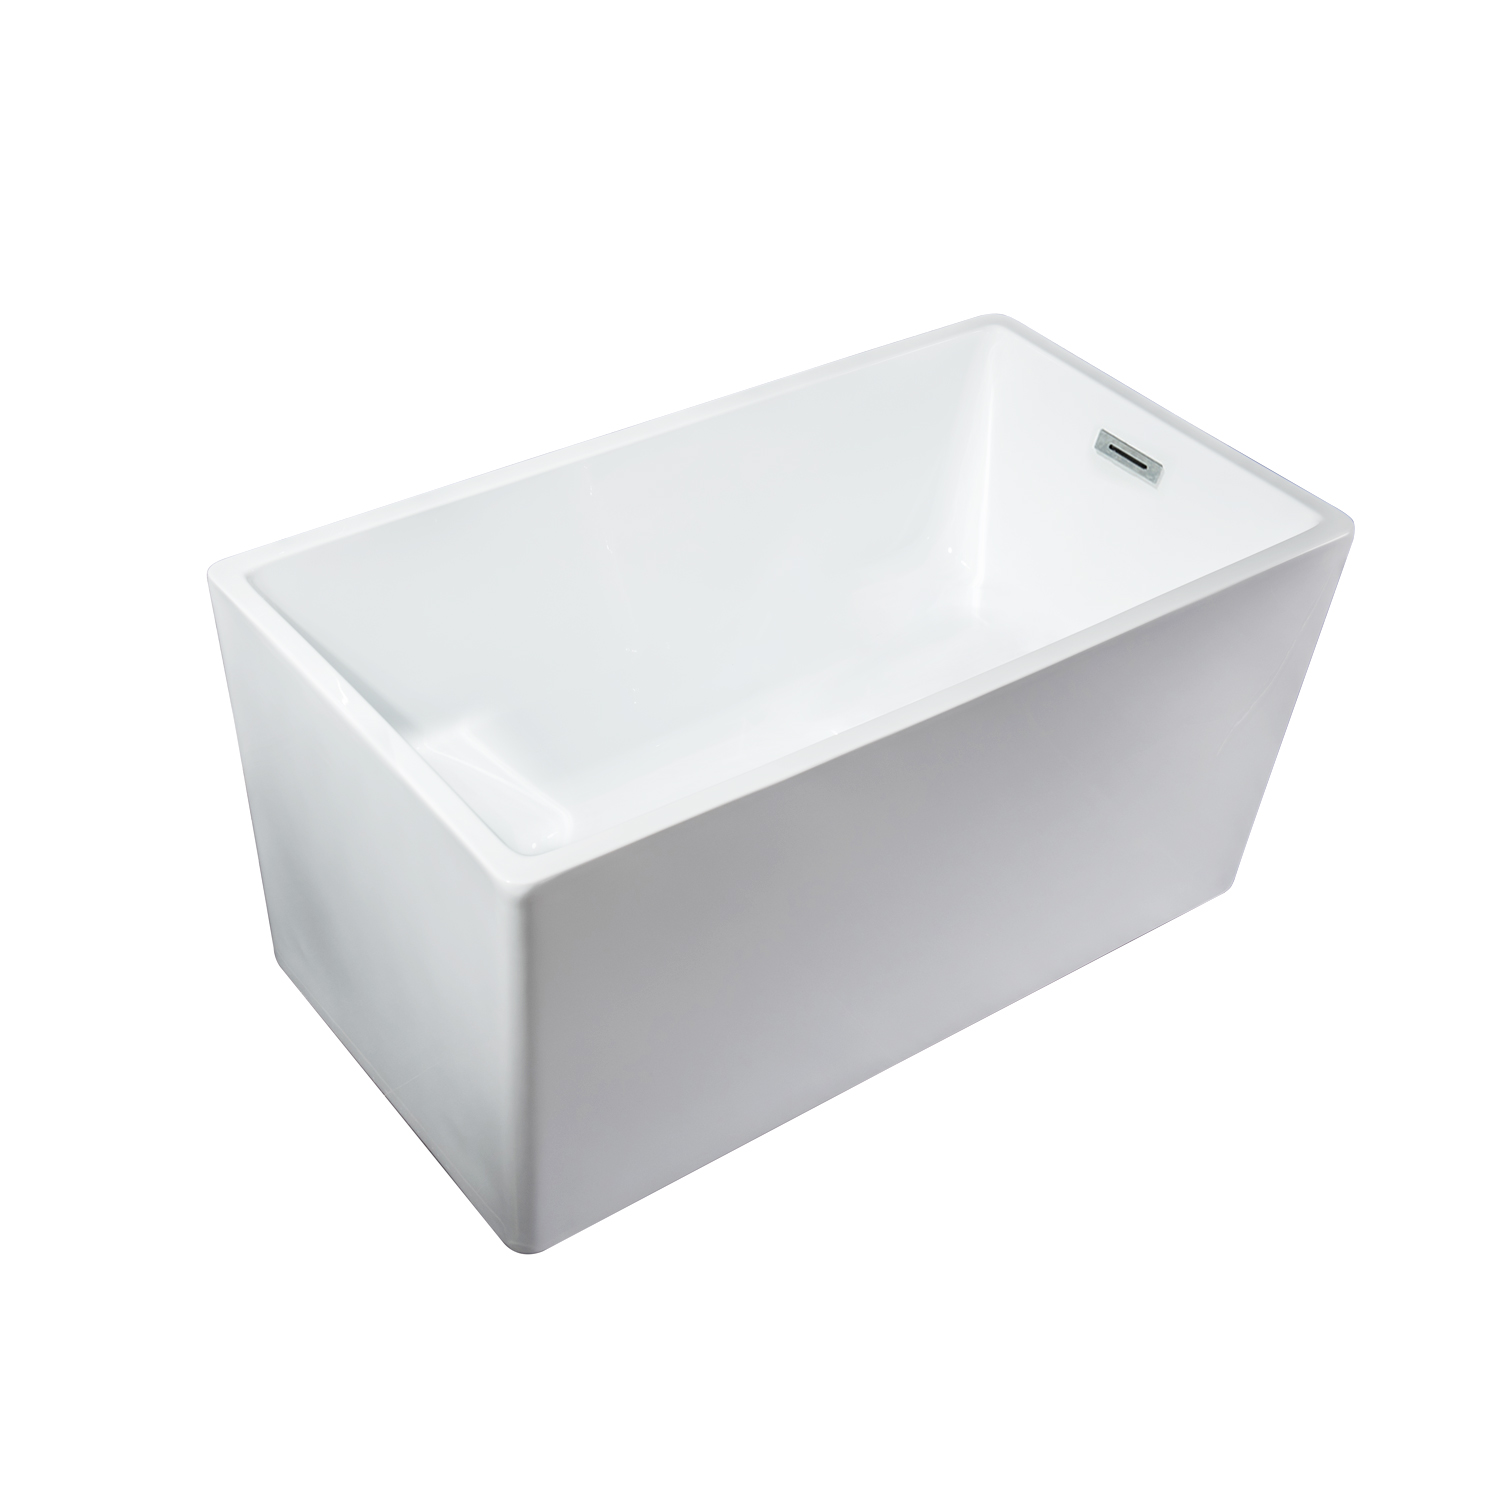 47 inches Freestanding Acrylic Flatbottom  Soaking Tub  Bathtub in White